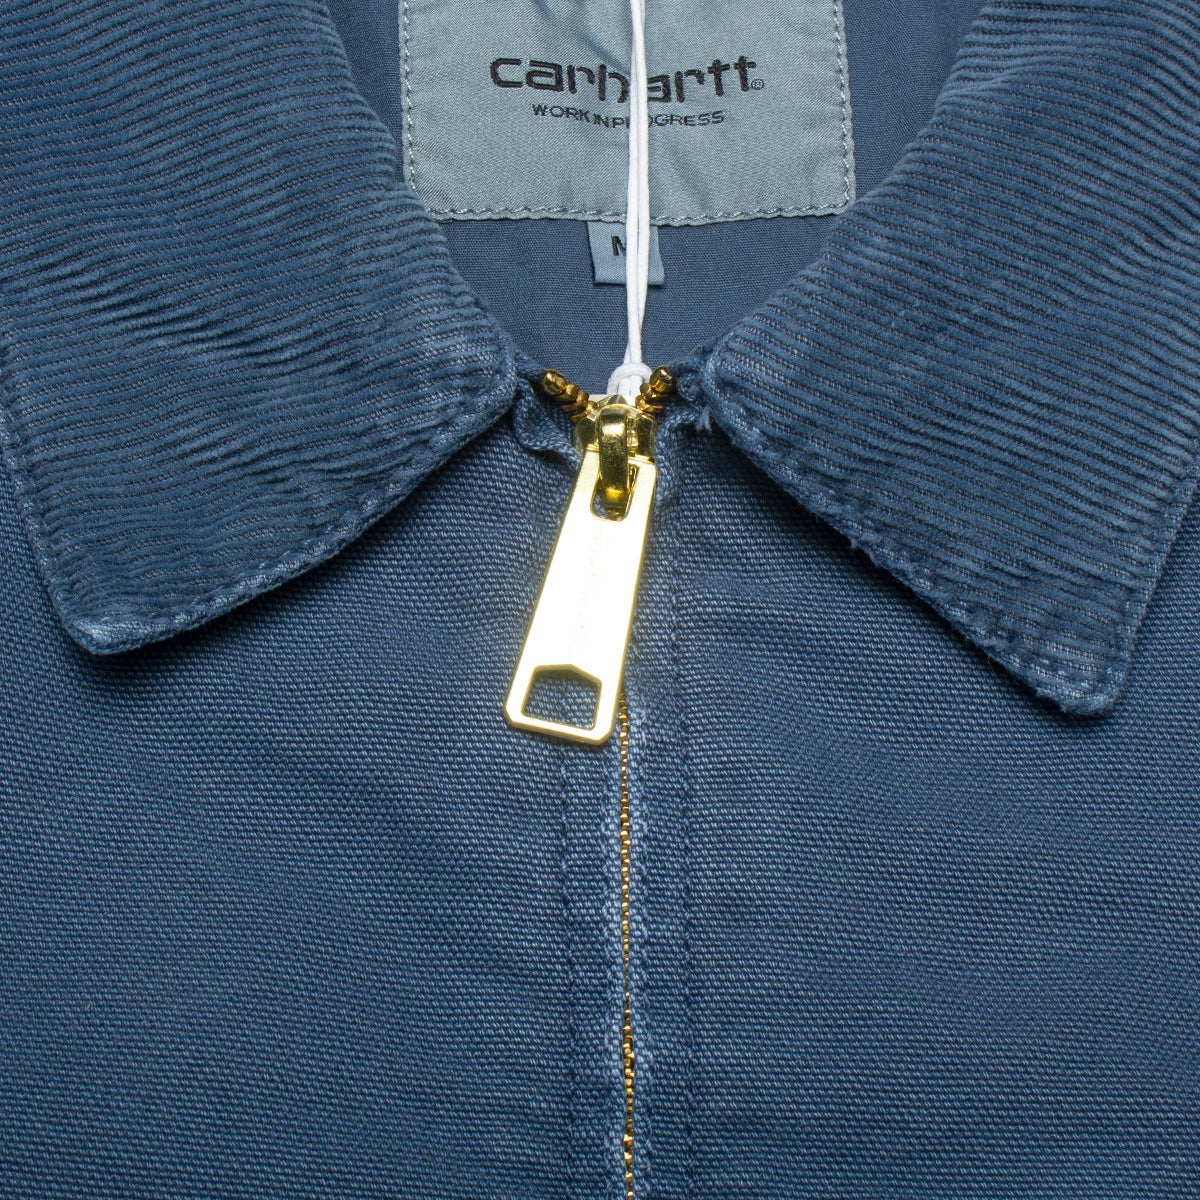 Carhartt WIP Detroit Jacket Style # I026467-1EG Color : Storm Blue